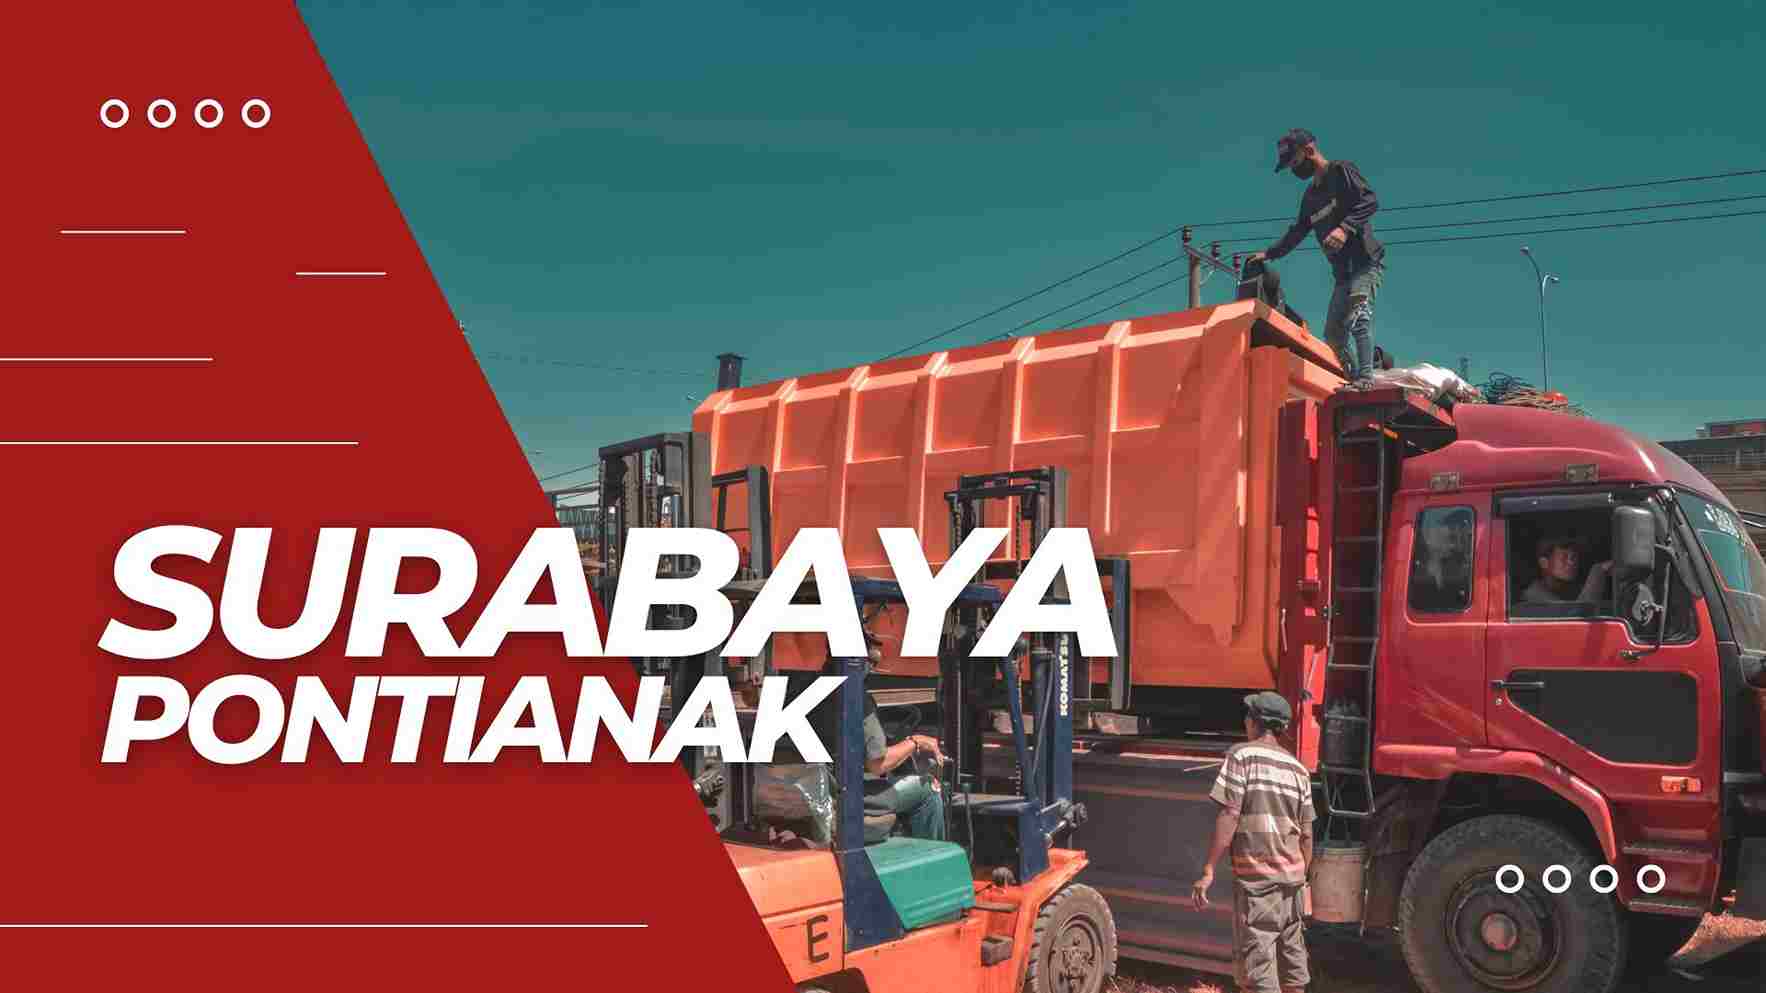 Cargo Container Surabaya Pontianak